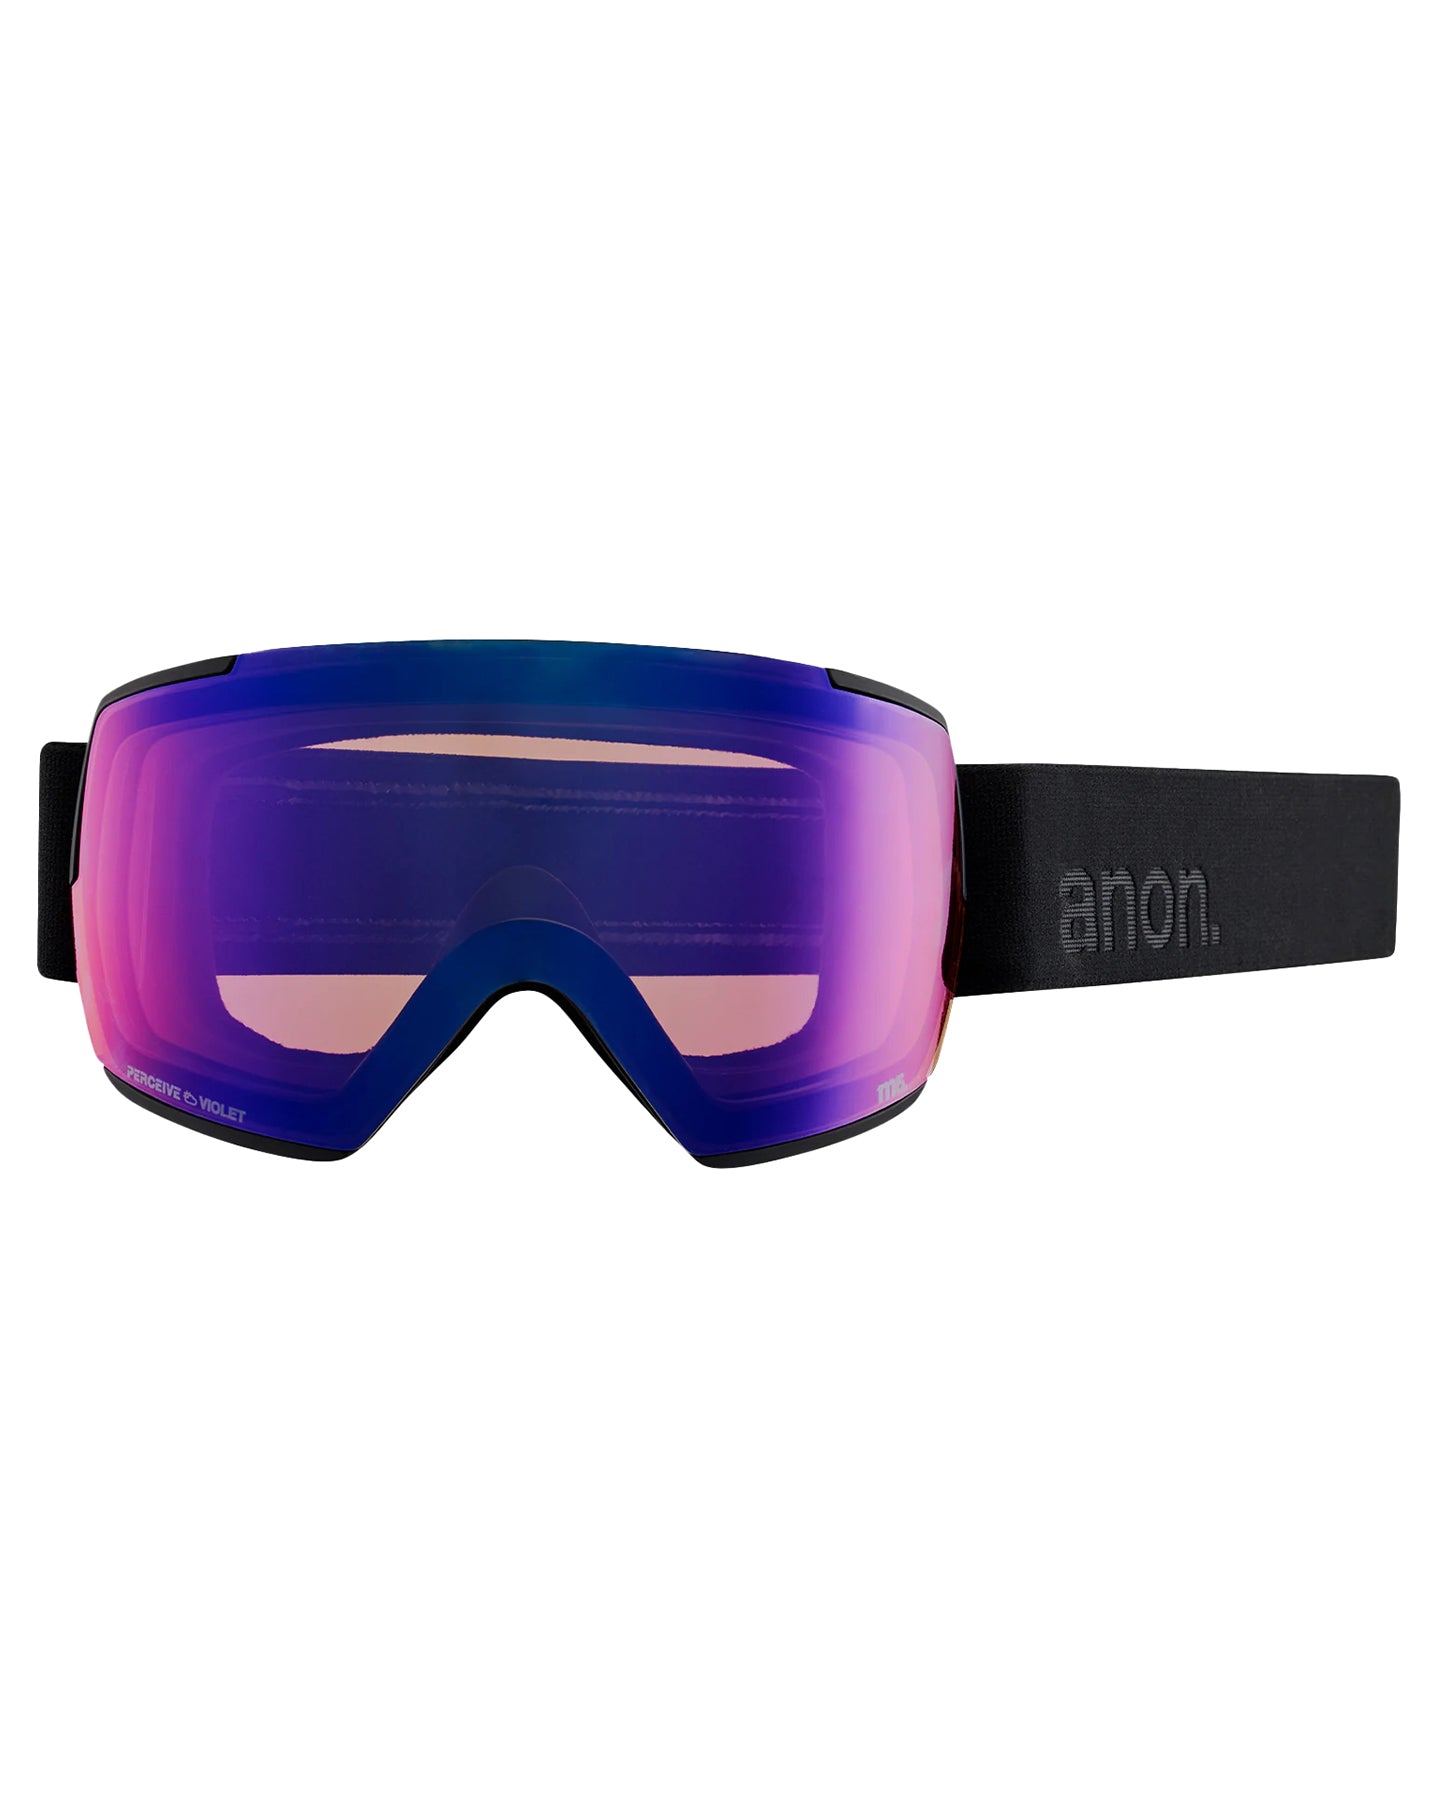 Anon M5 Snow Goggles - Smoke/Perceive Sunny Onyx Lens Men's Snow Goggles - Trojan Wake Ski Snow